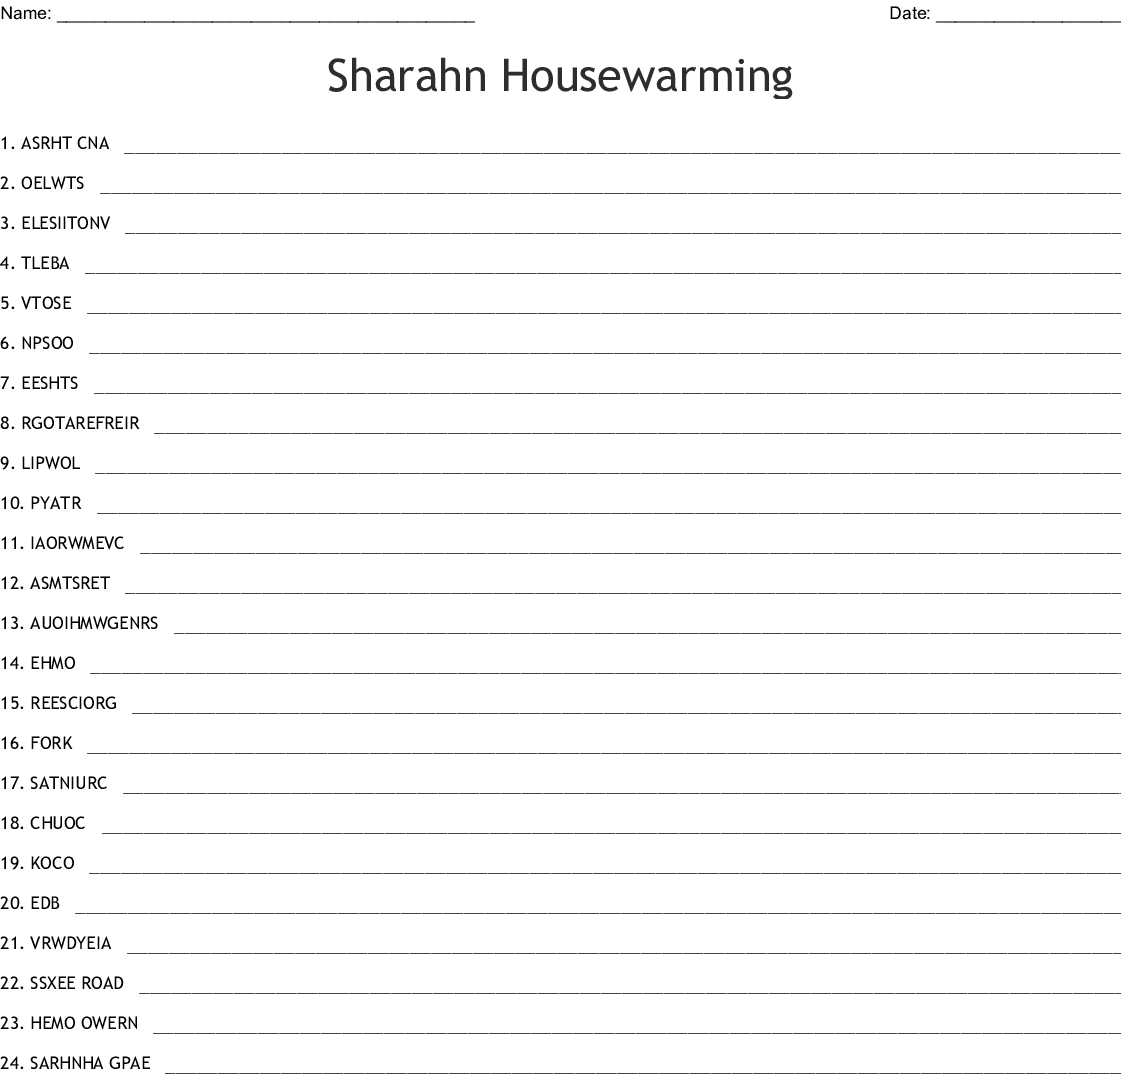 Housewarming Word Search - Wordmint